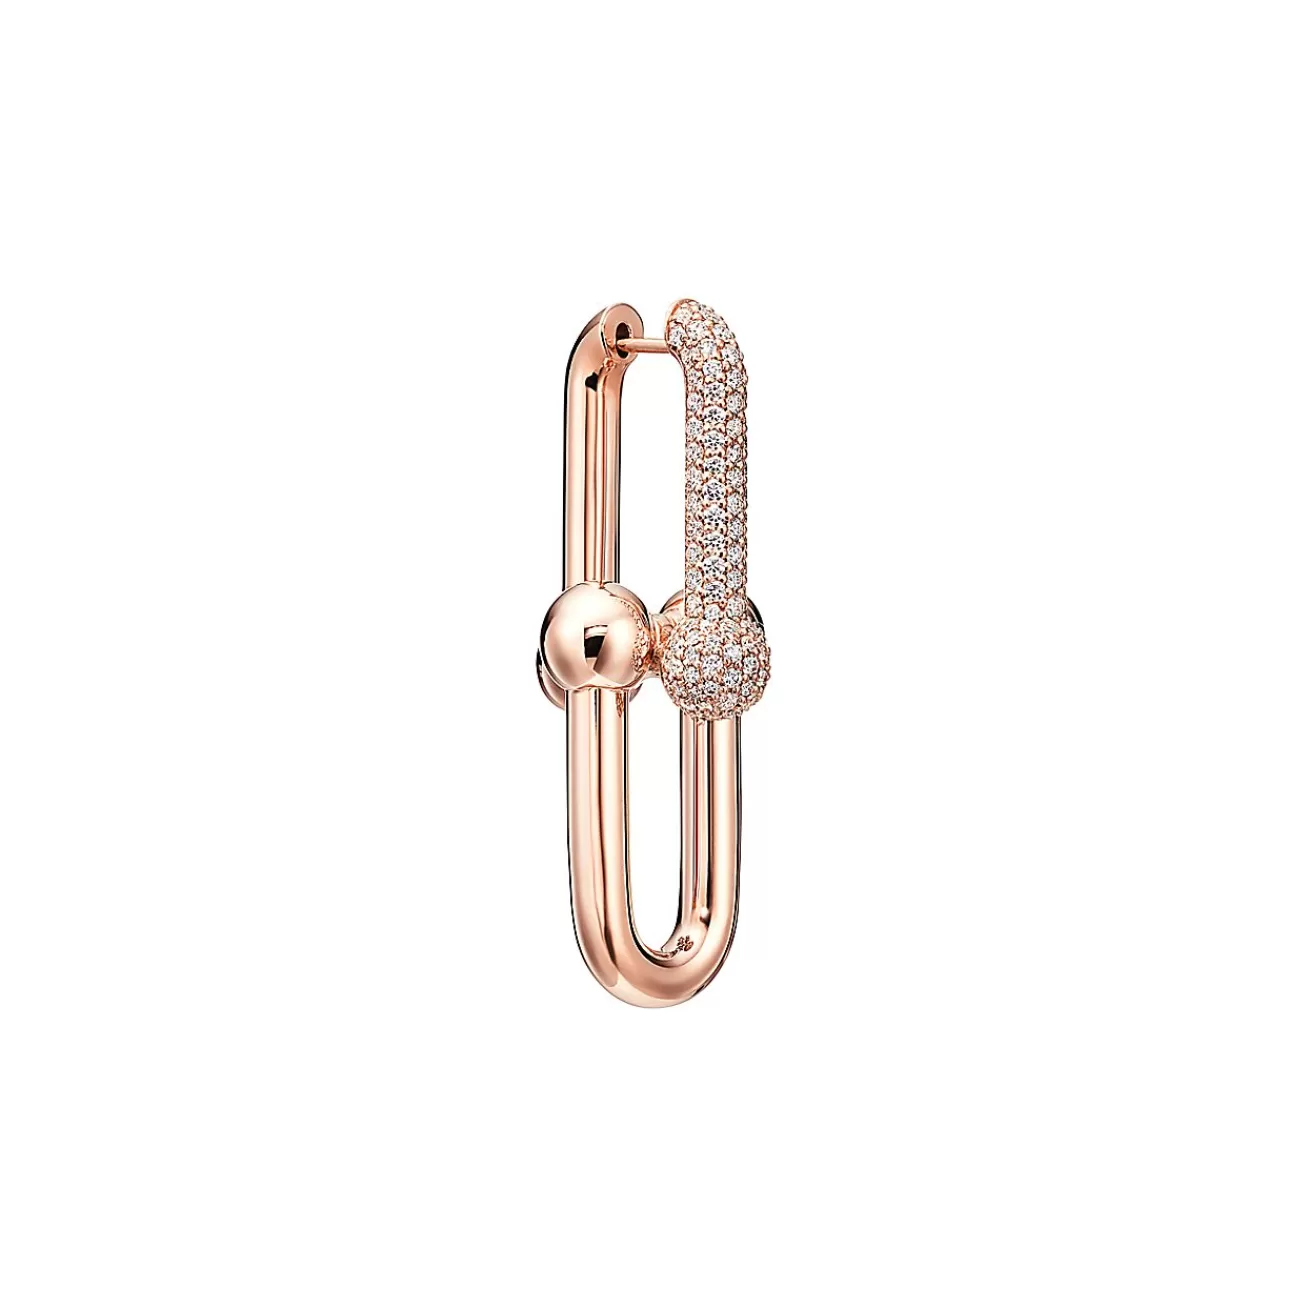 Tiffany & Co. Tiffany HardWear Large Link Earrings in Rose Gold with Pavé Diamonds | ^ Earrings | Rose Gold Jewelry